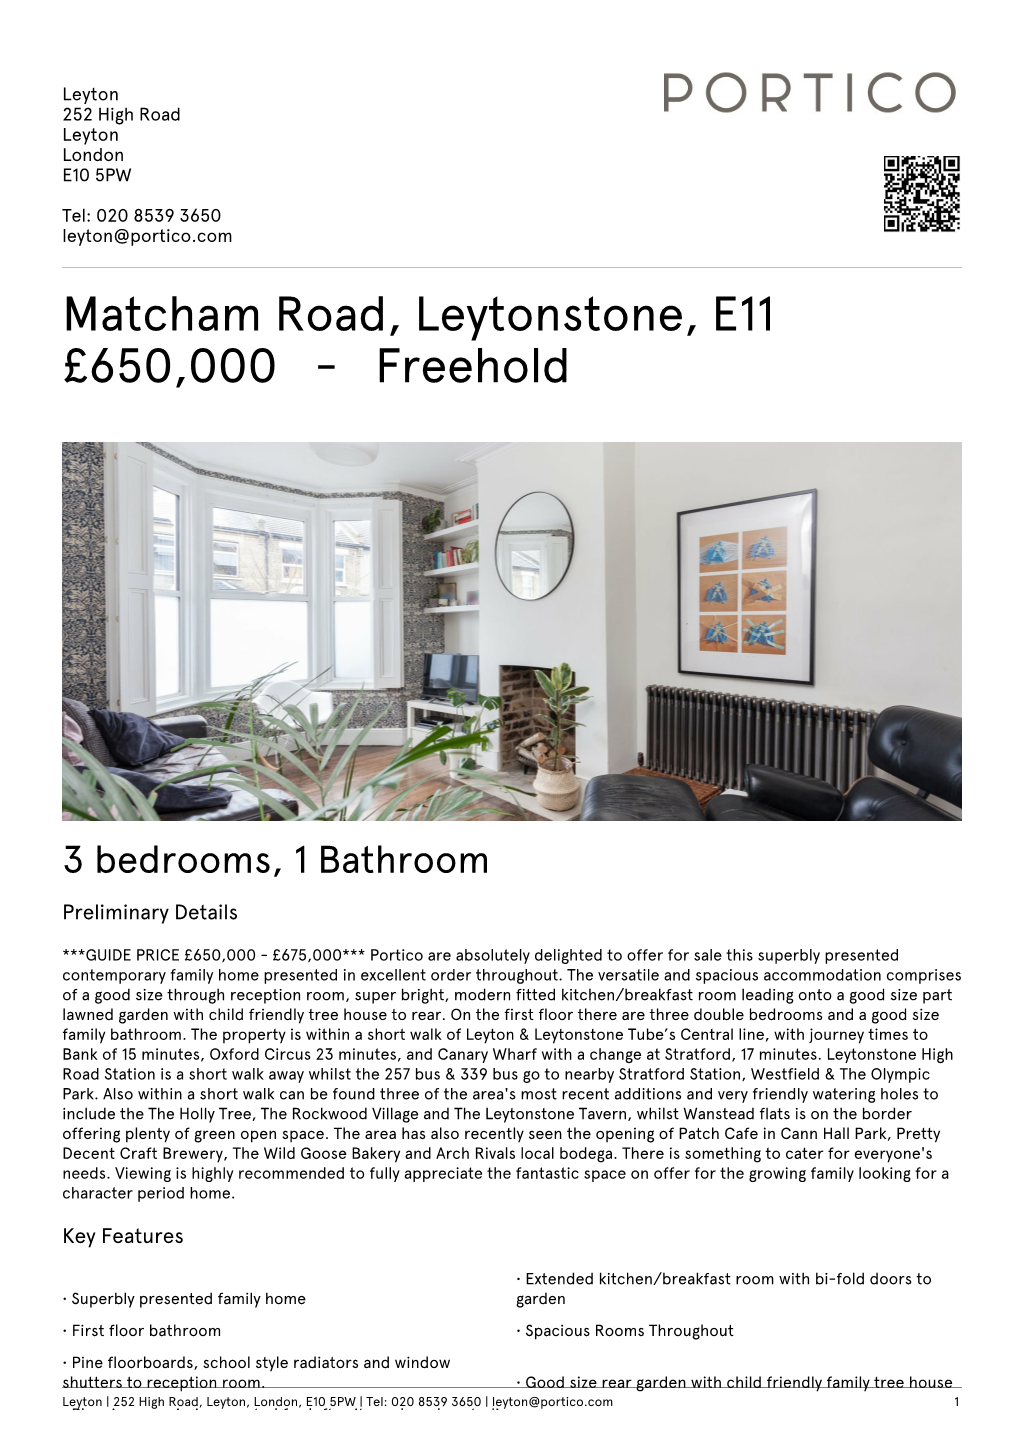 Matcham Road, Leytonstone, E11 £650,000